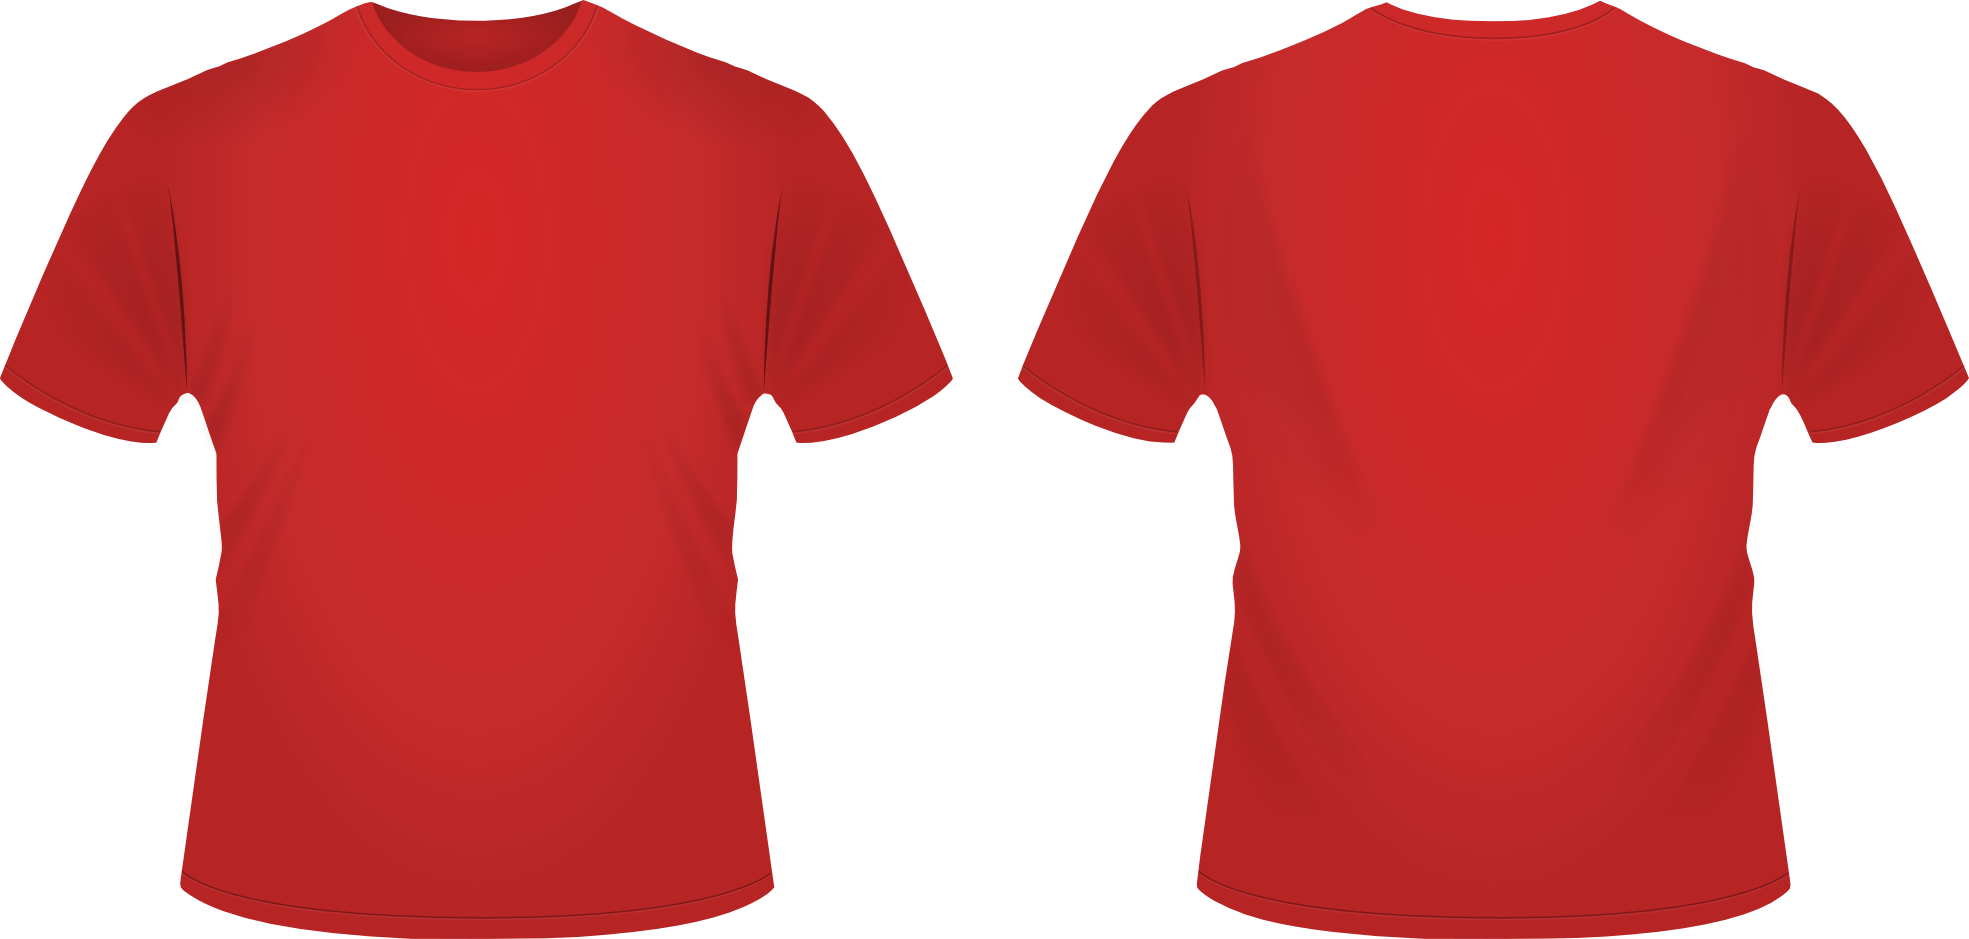 Простая красная футболка PNG картина